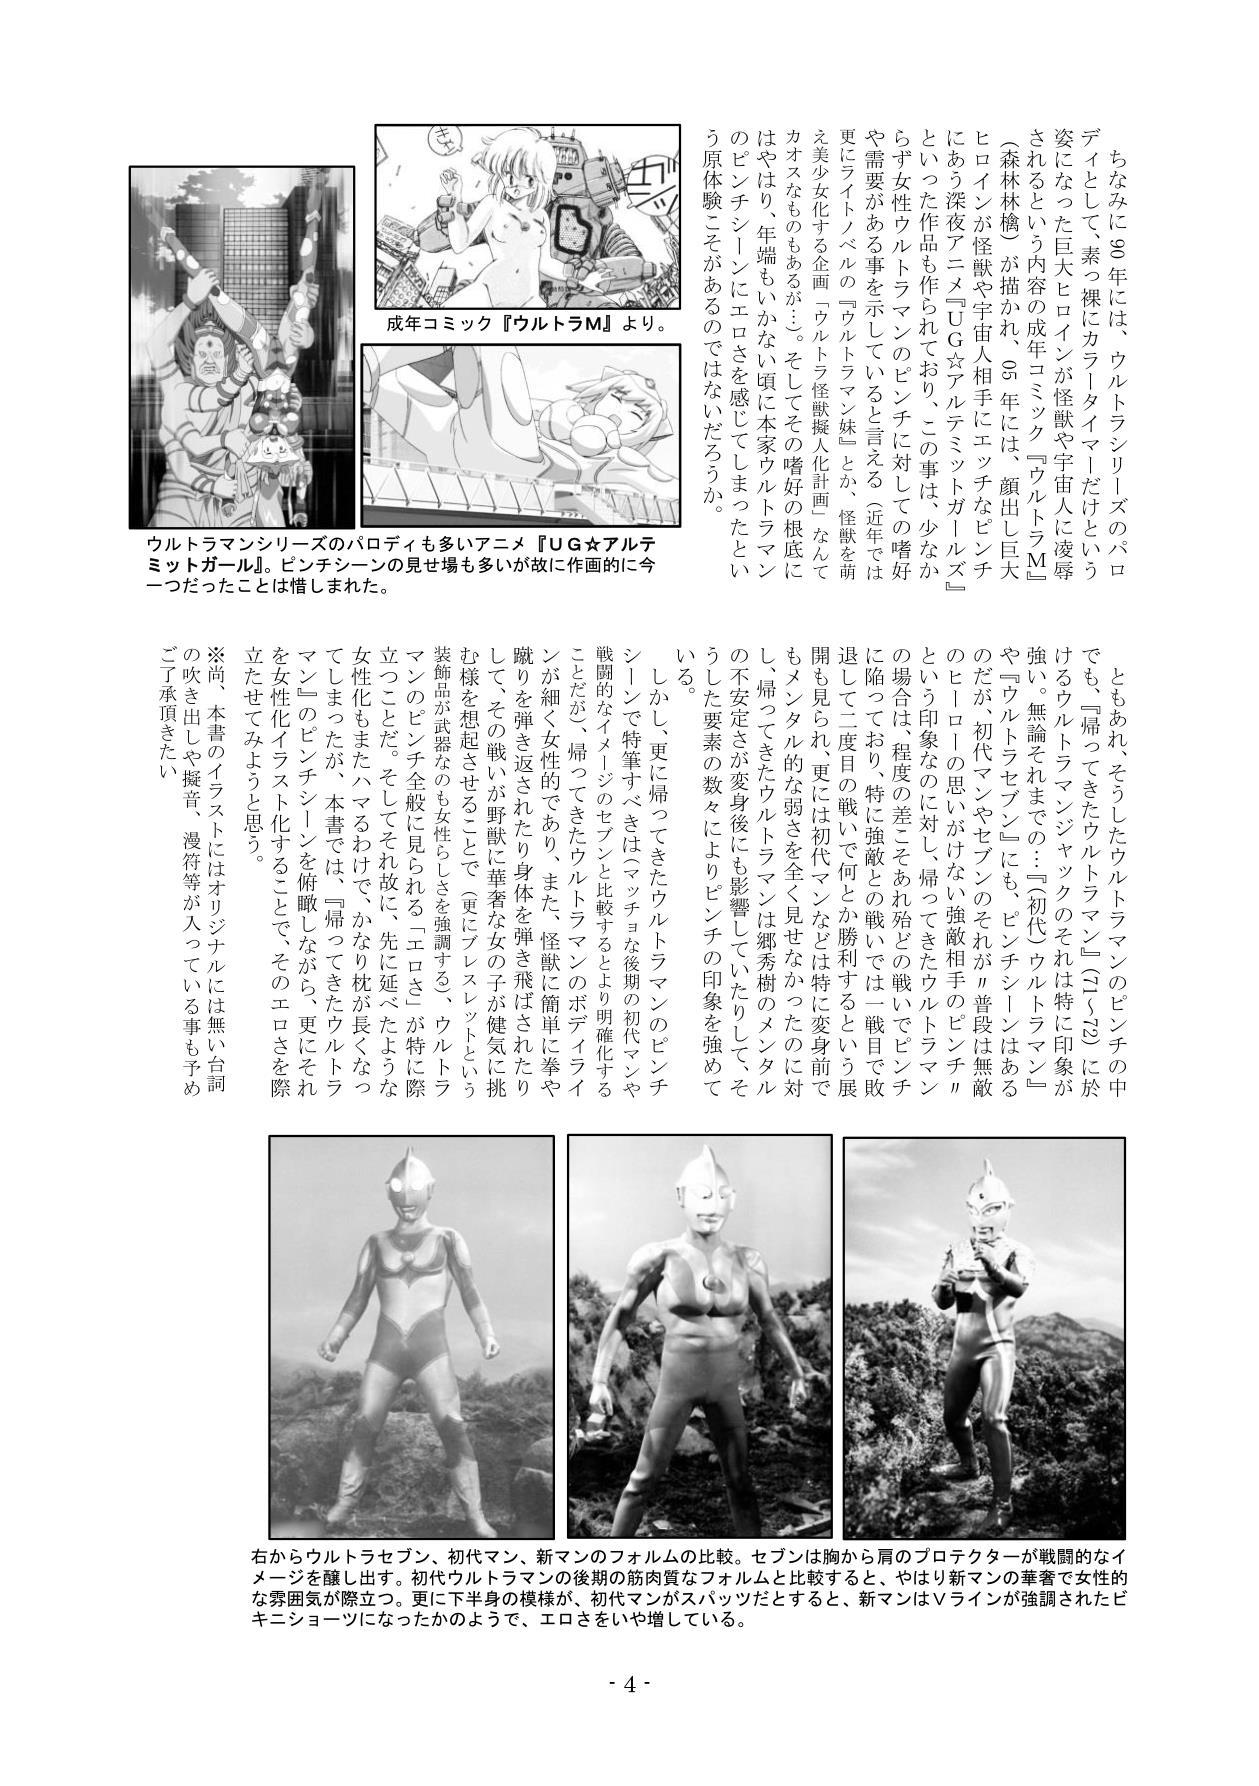 Kaettekita Ultraman Musume Dai Pinch 2